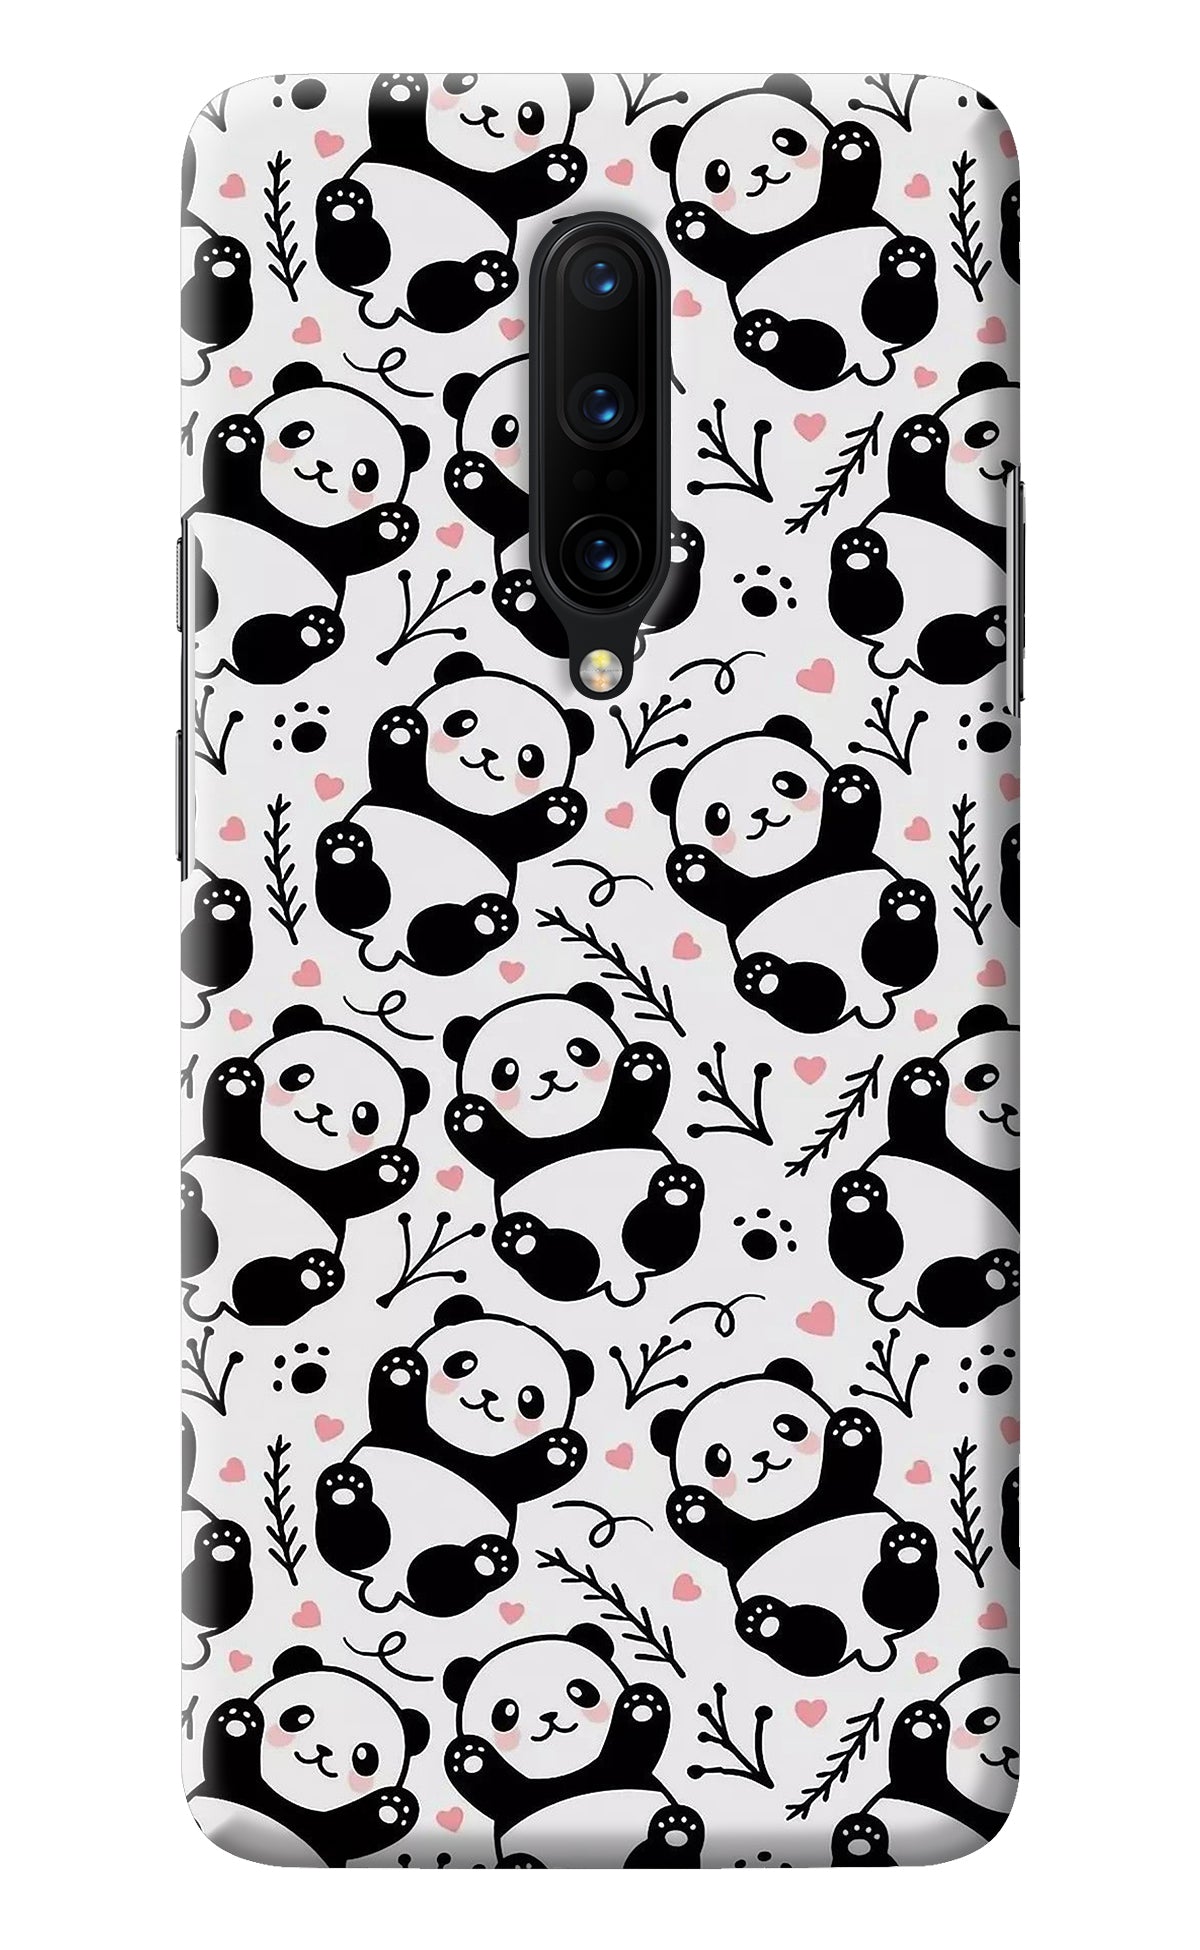 Cute Panda Oneplus 7 Pro Back Cover